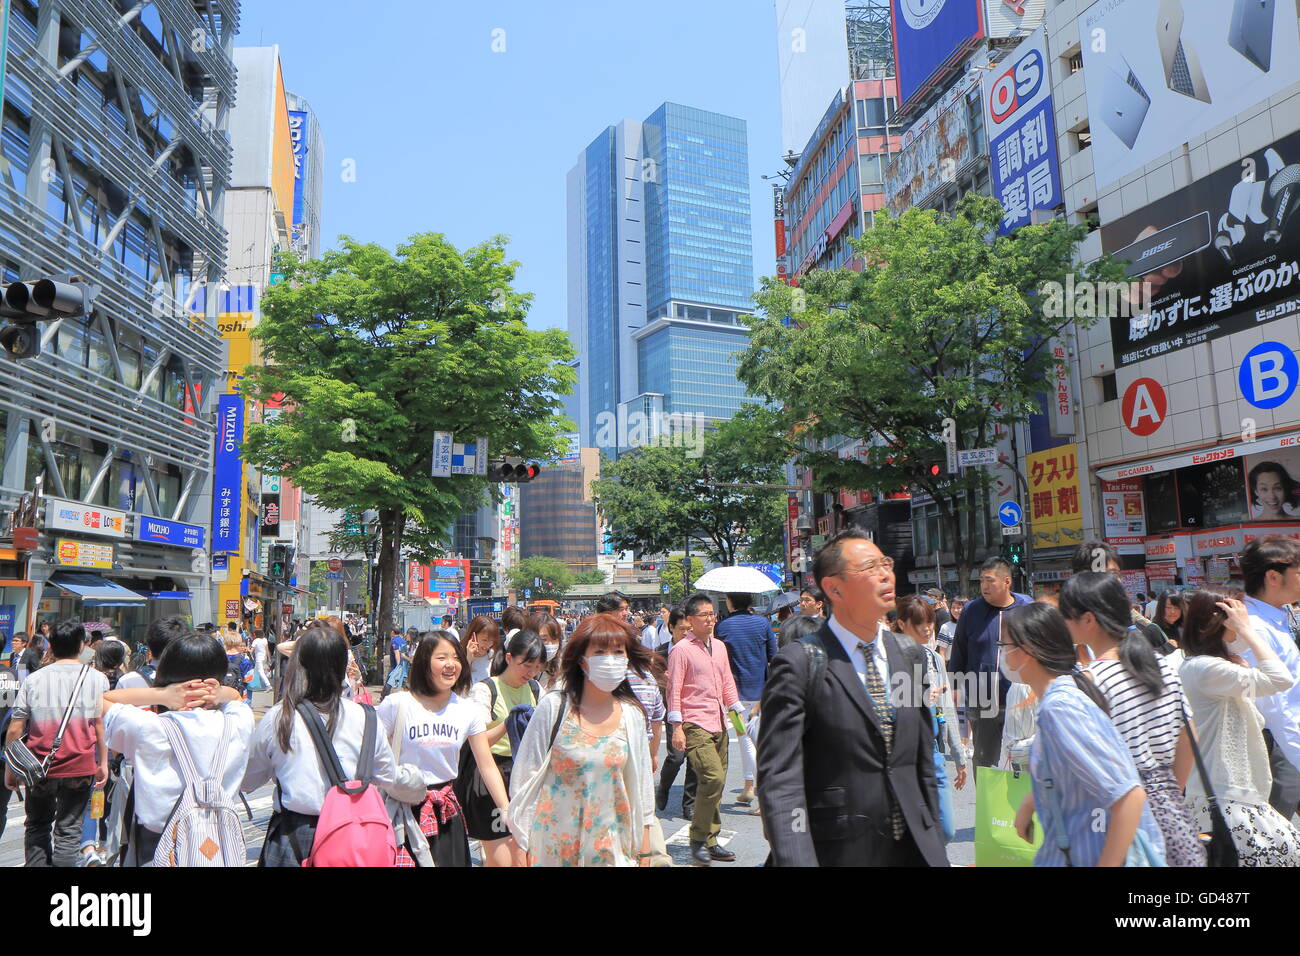 Busy Shibuya crossing in Tokyo Japan. Stock Photo